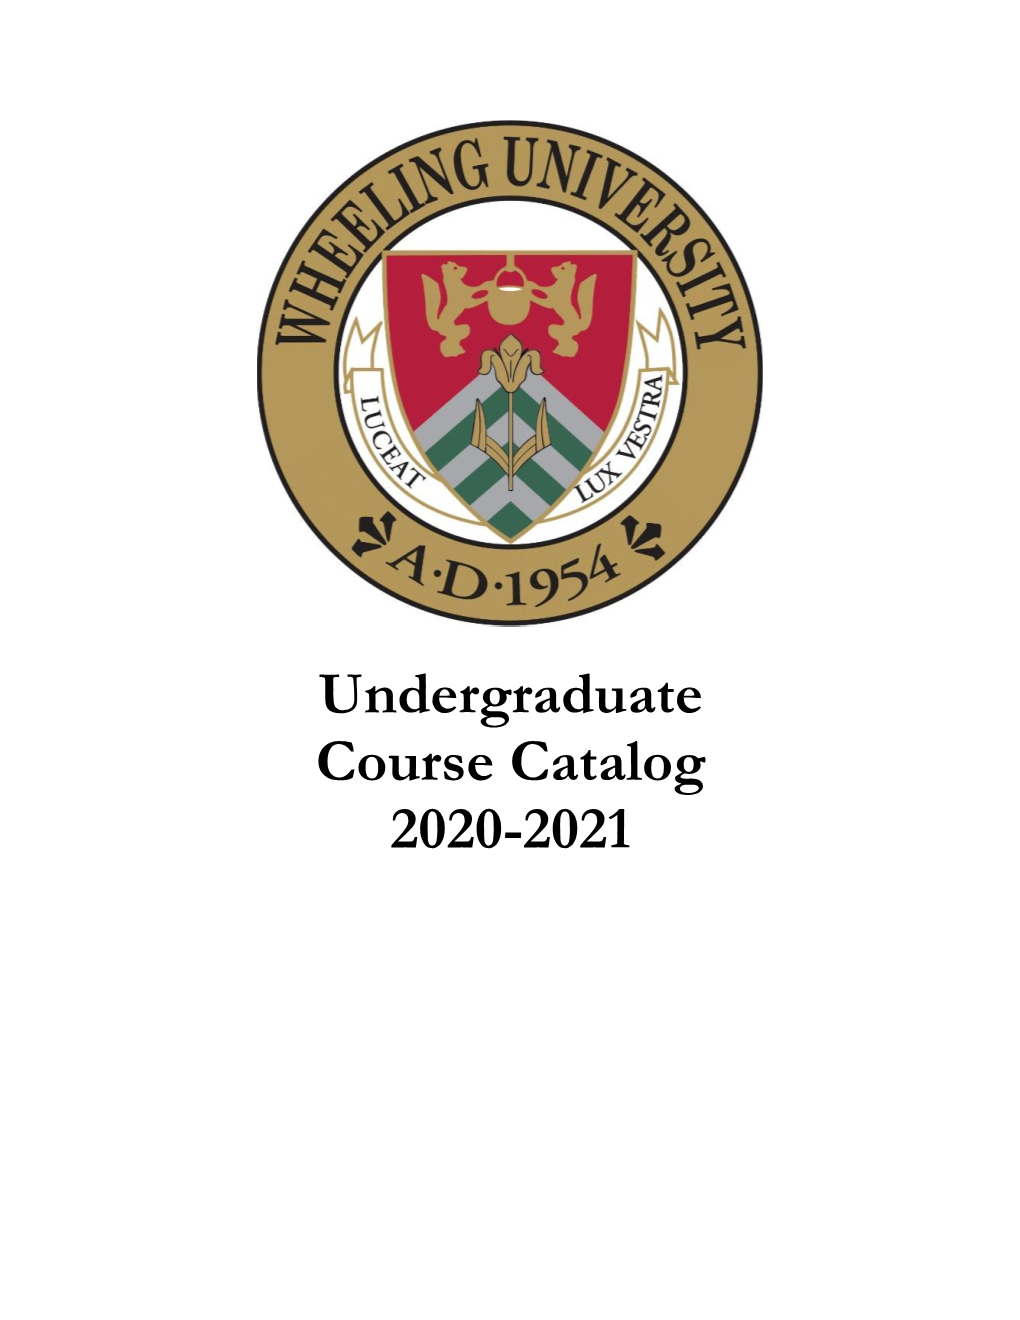 Undergraduate Course Catalog 2020-2021